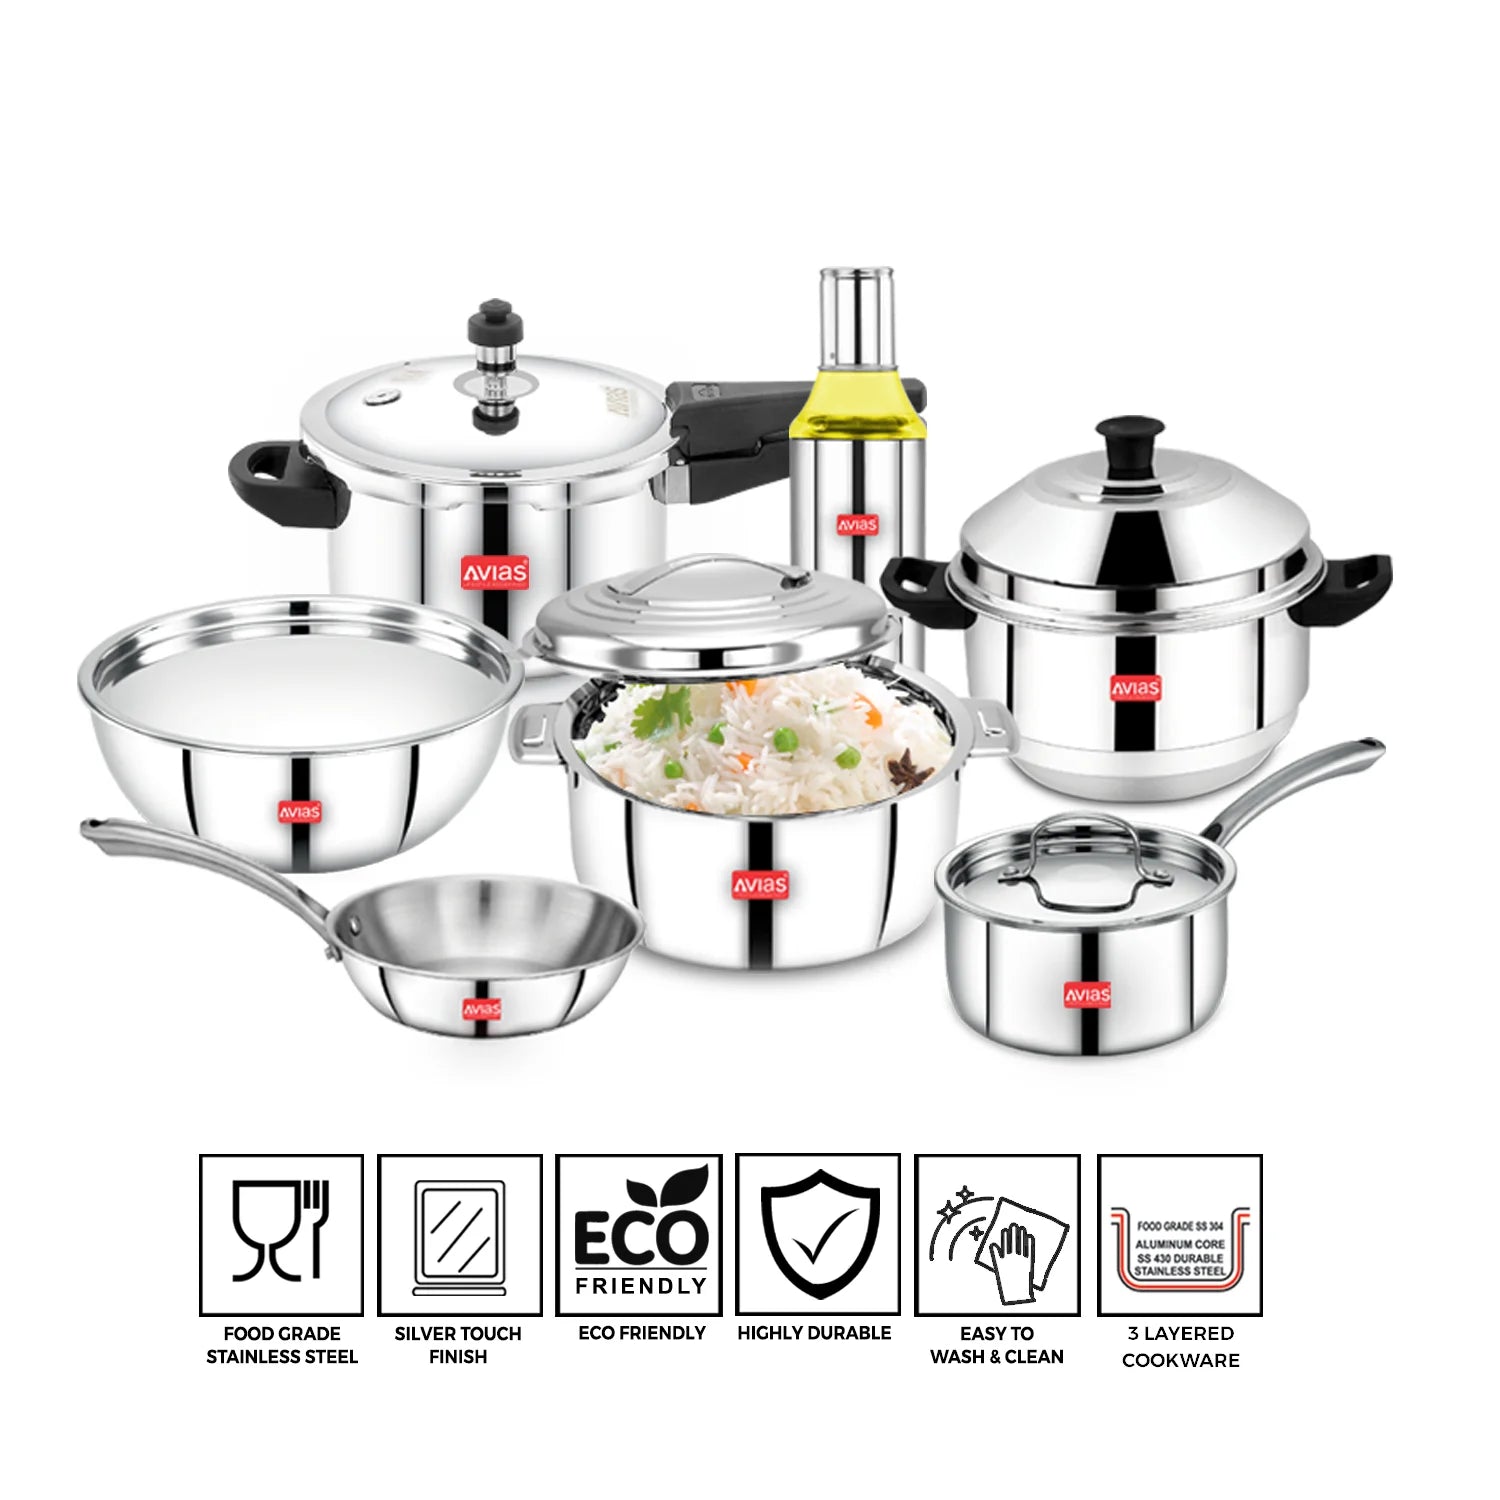 Avias Stainless Steel  kitchenware/ cookware 7 PCS Kitchen set 